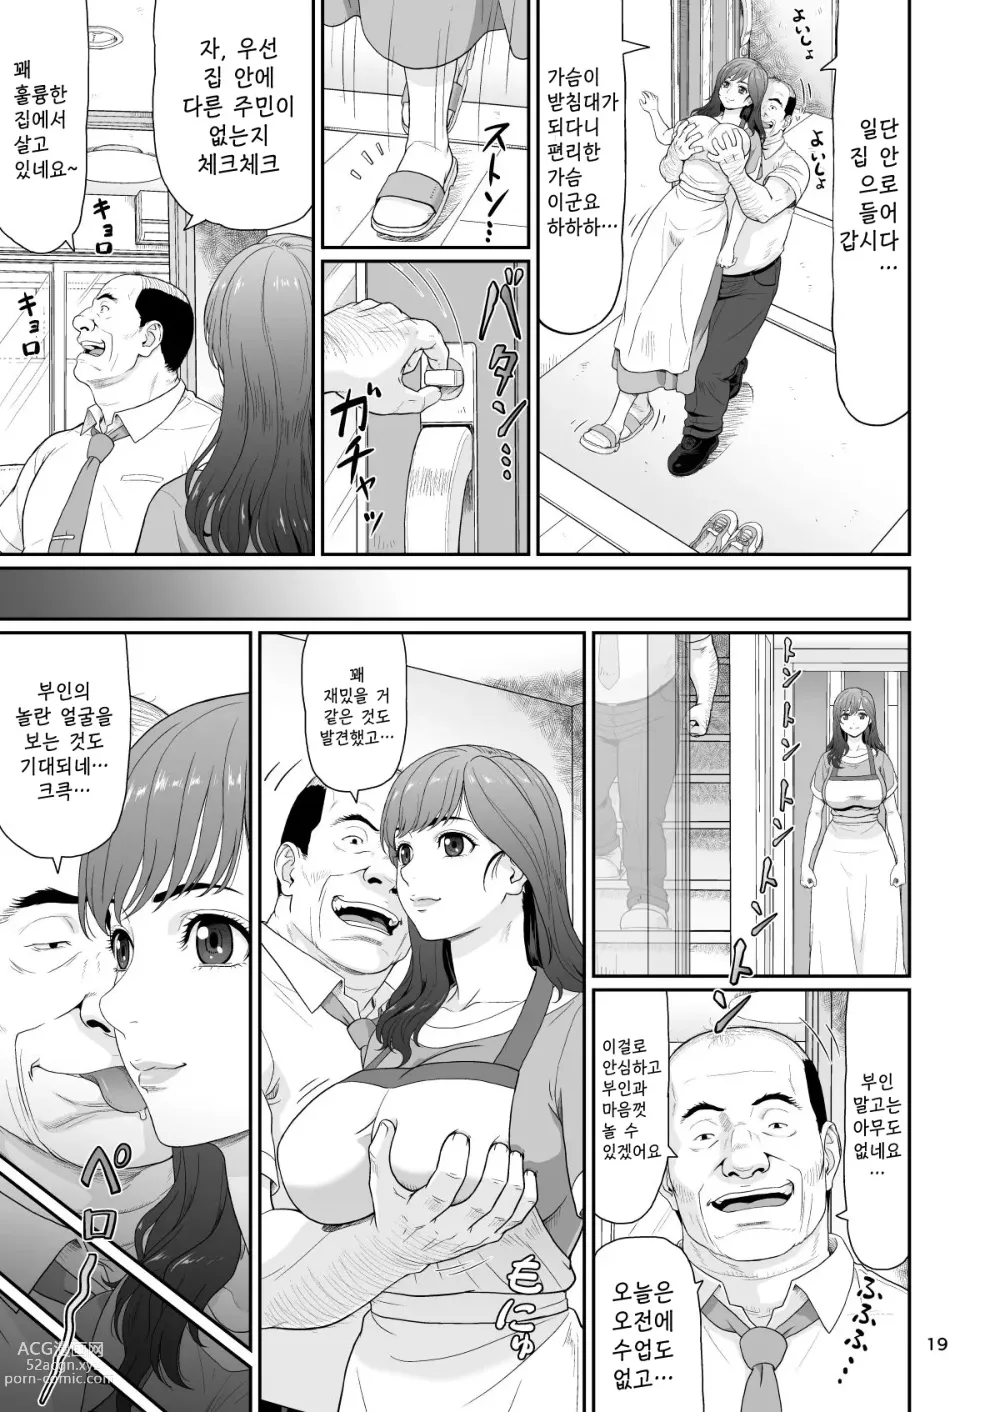 Page 19 of doujinshi 야한 짓 이외에 시간을 멈춰선 안된다구요 2